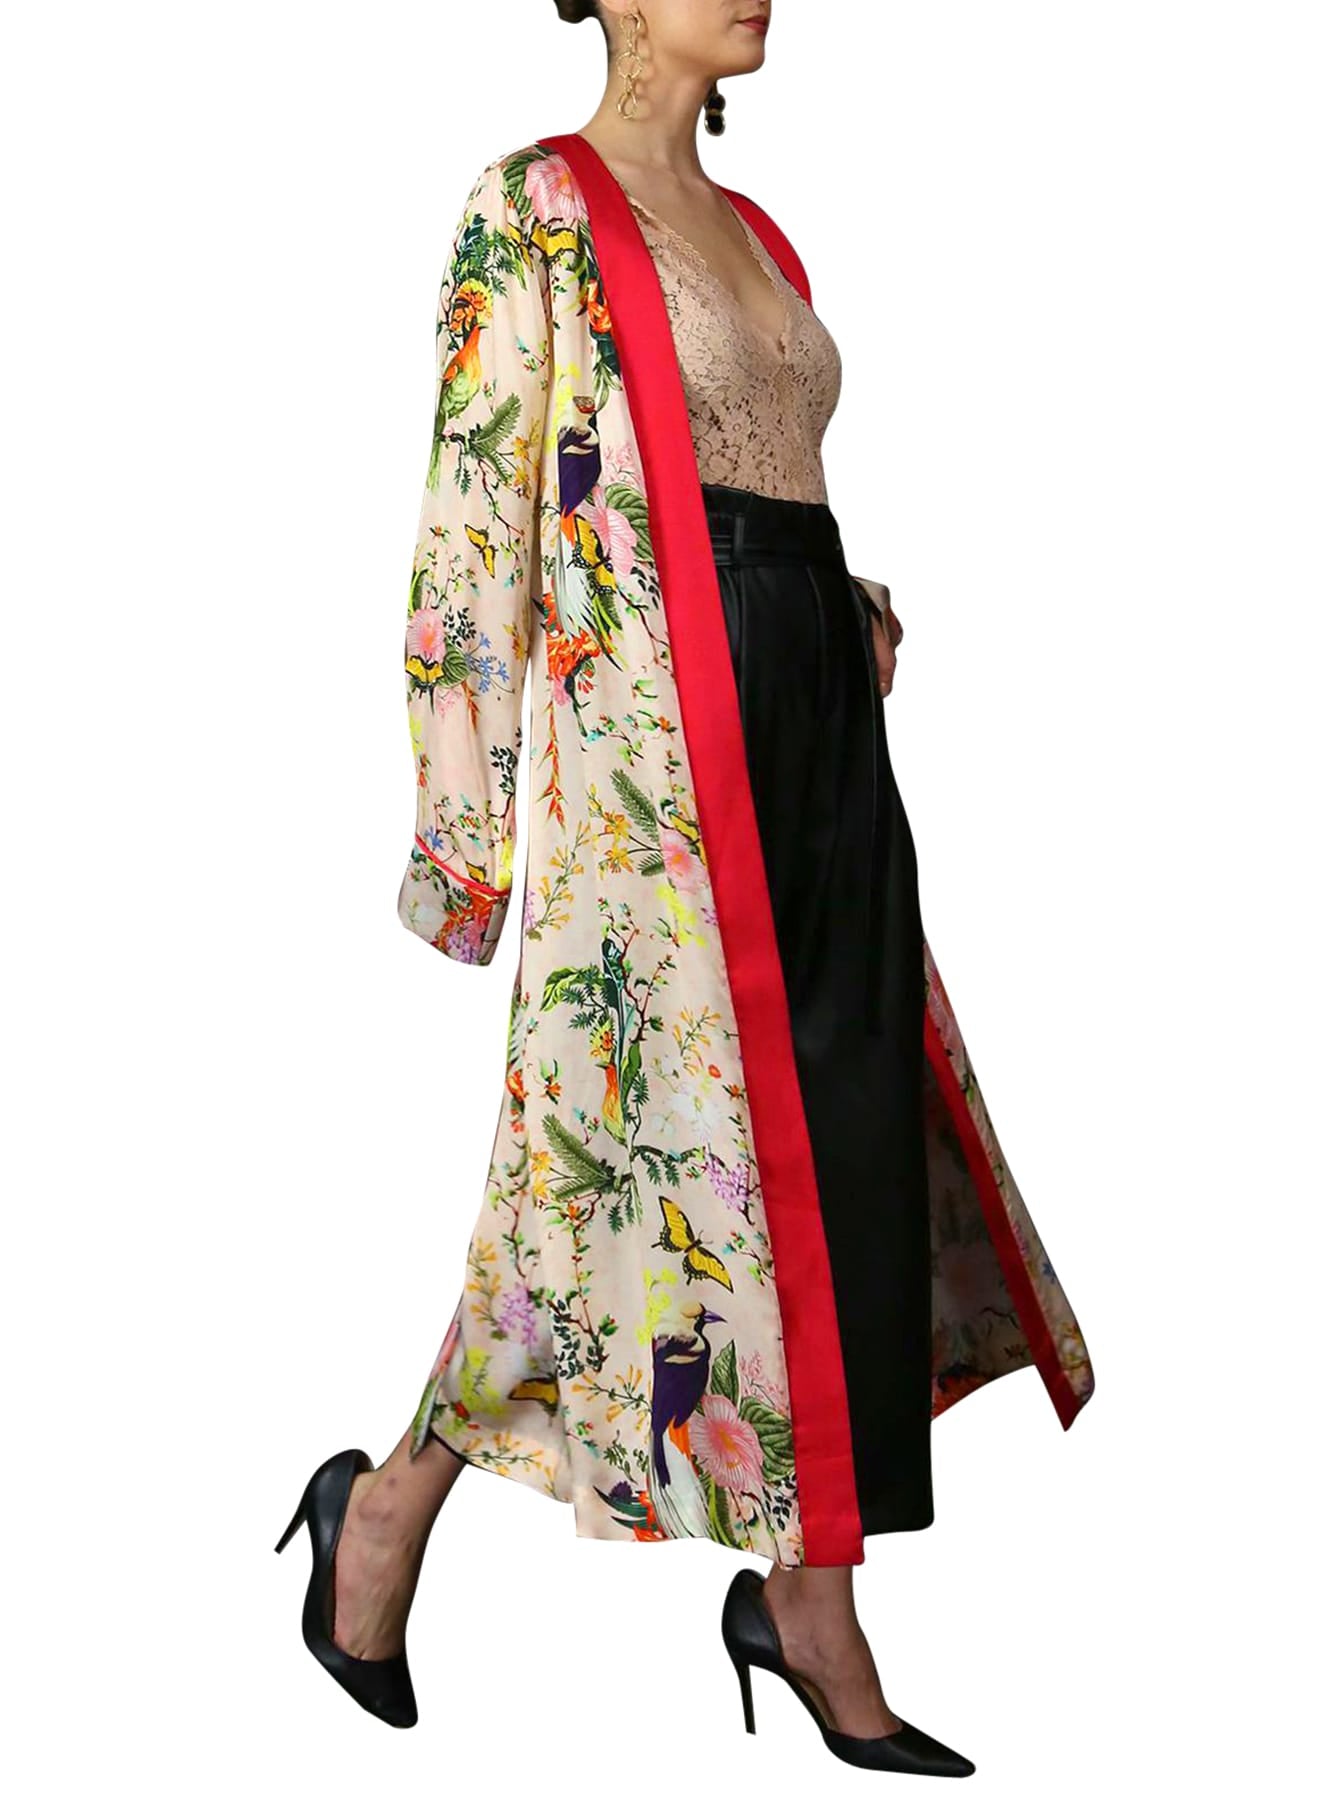 "Kyle X Shahida" "summer kimono" "hot pink silk robe" "silk robes and kimonos" "womens long kimono robe"